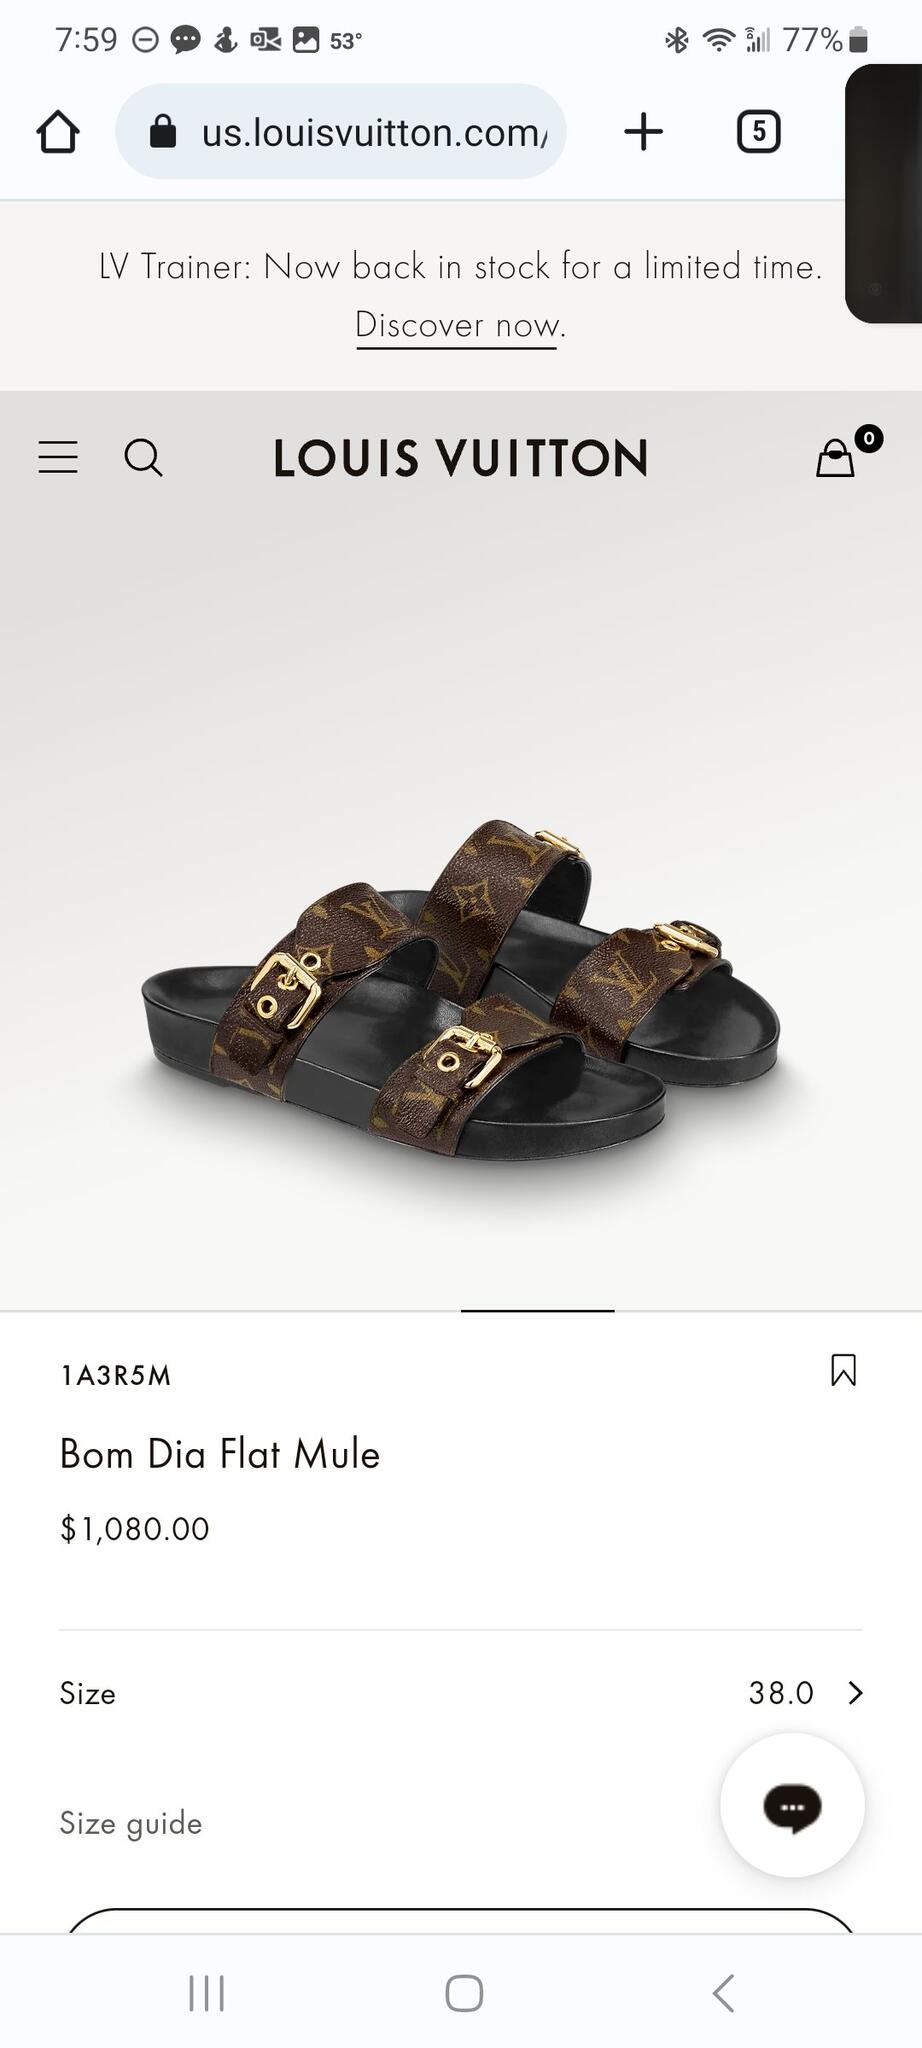 Louis Vuitton Bom Dia Flat Mule For $1,350 In Newark, DE